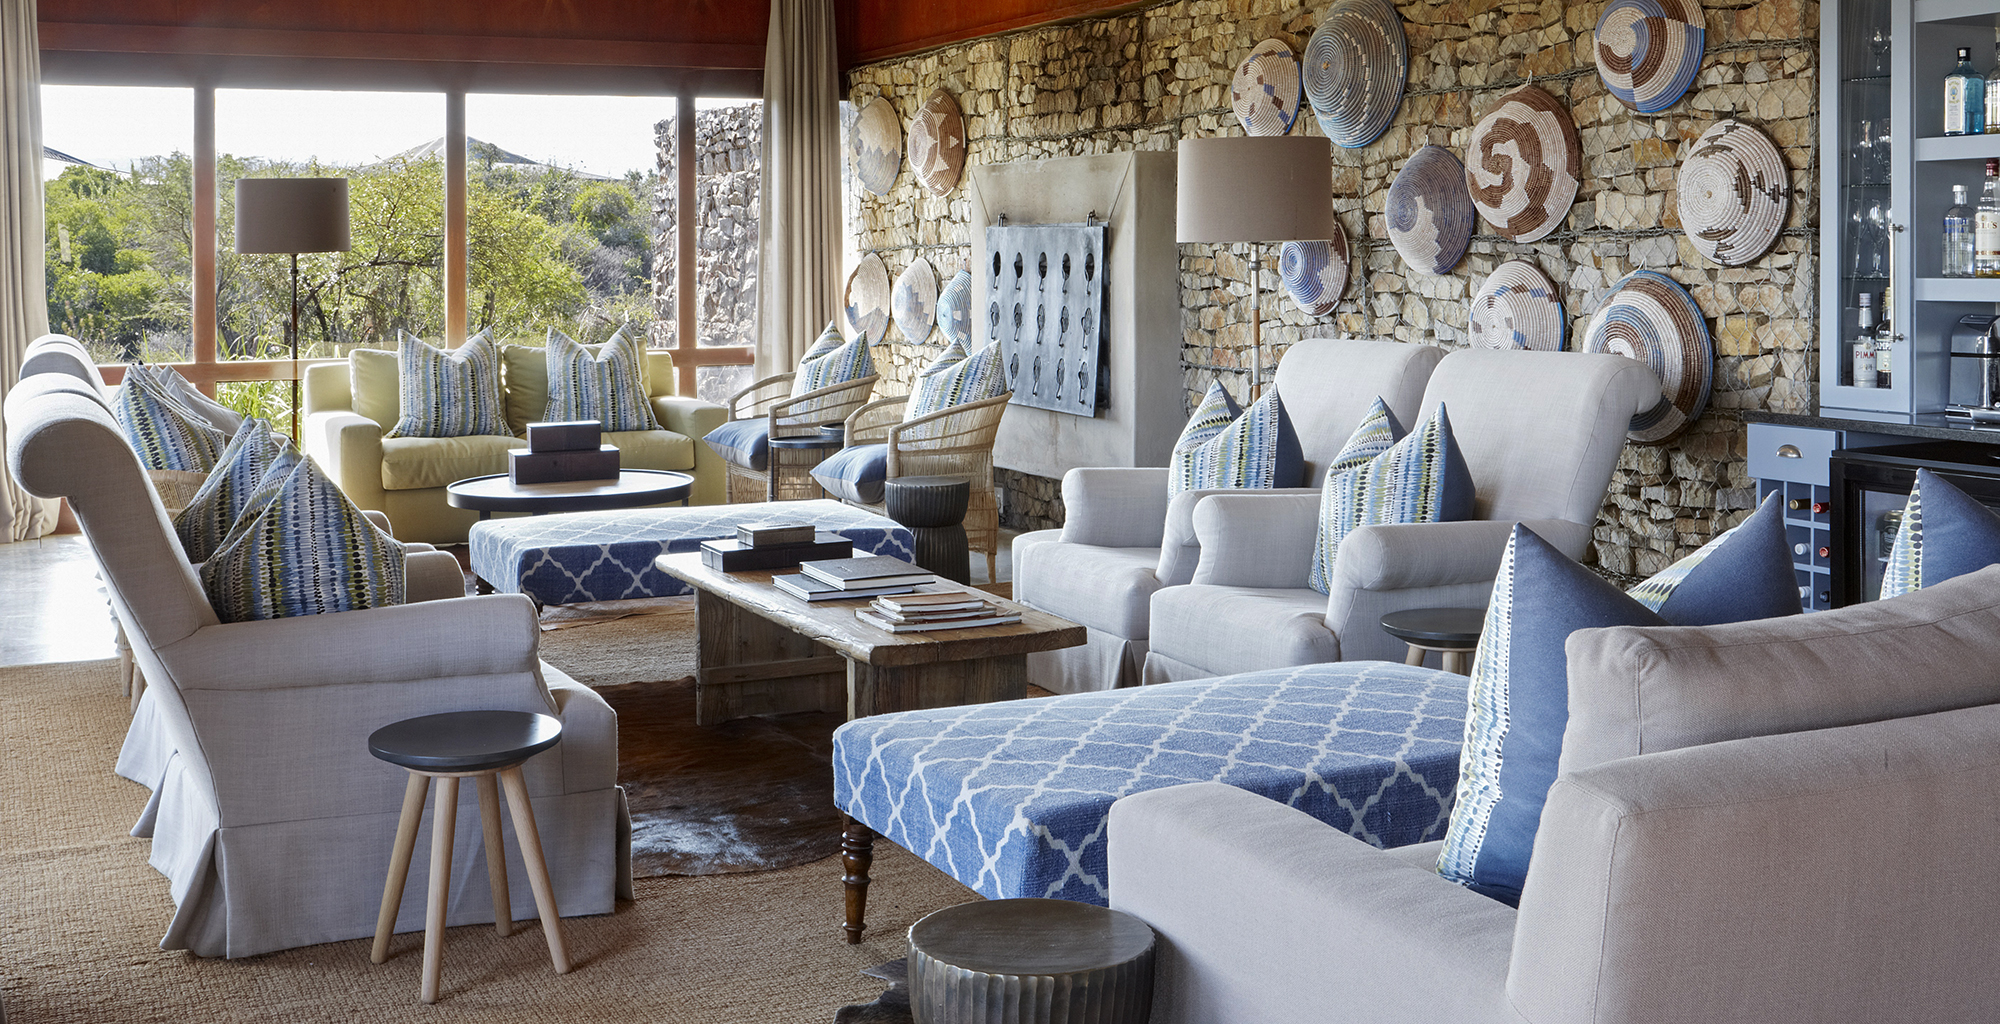 South-Africa-Ecca-Lodge-Lounge